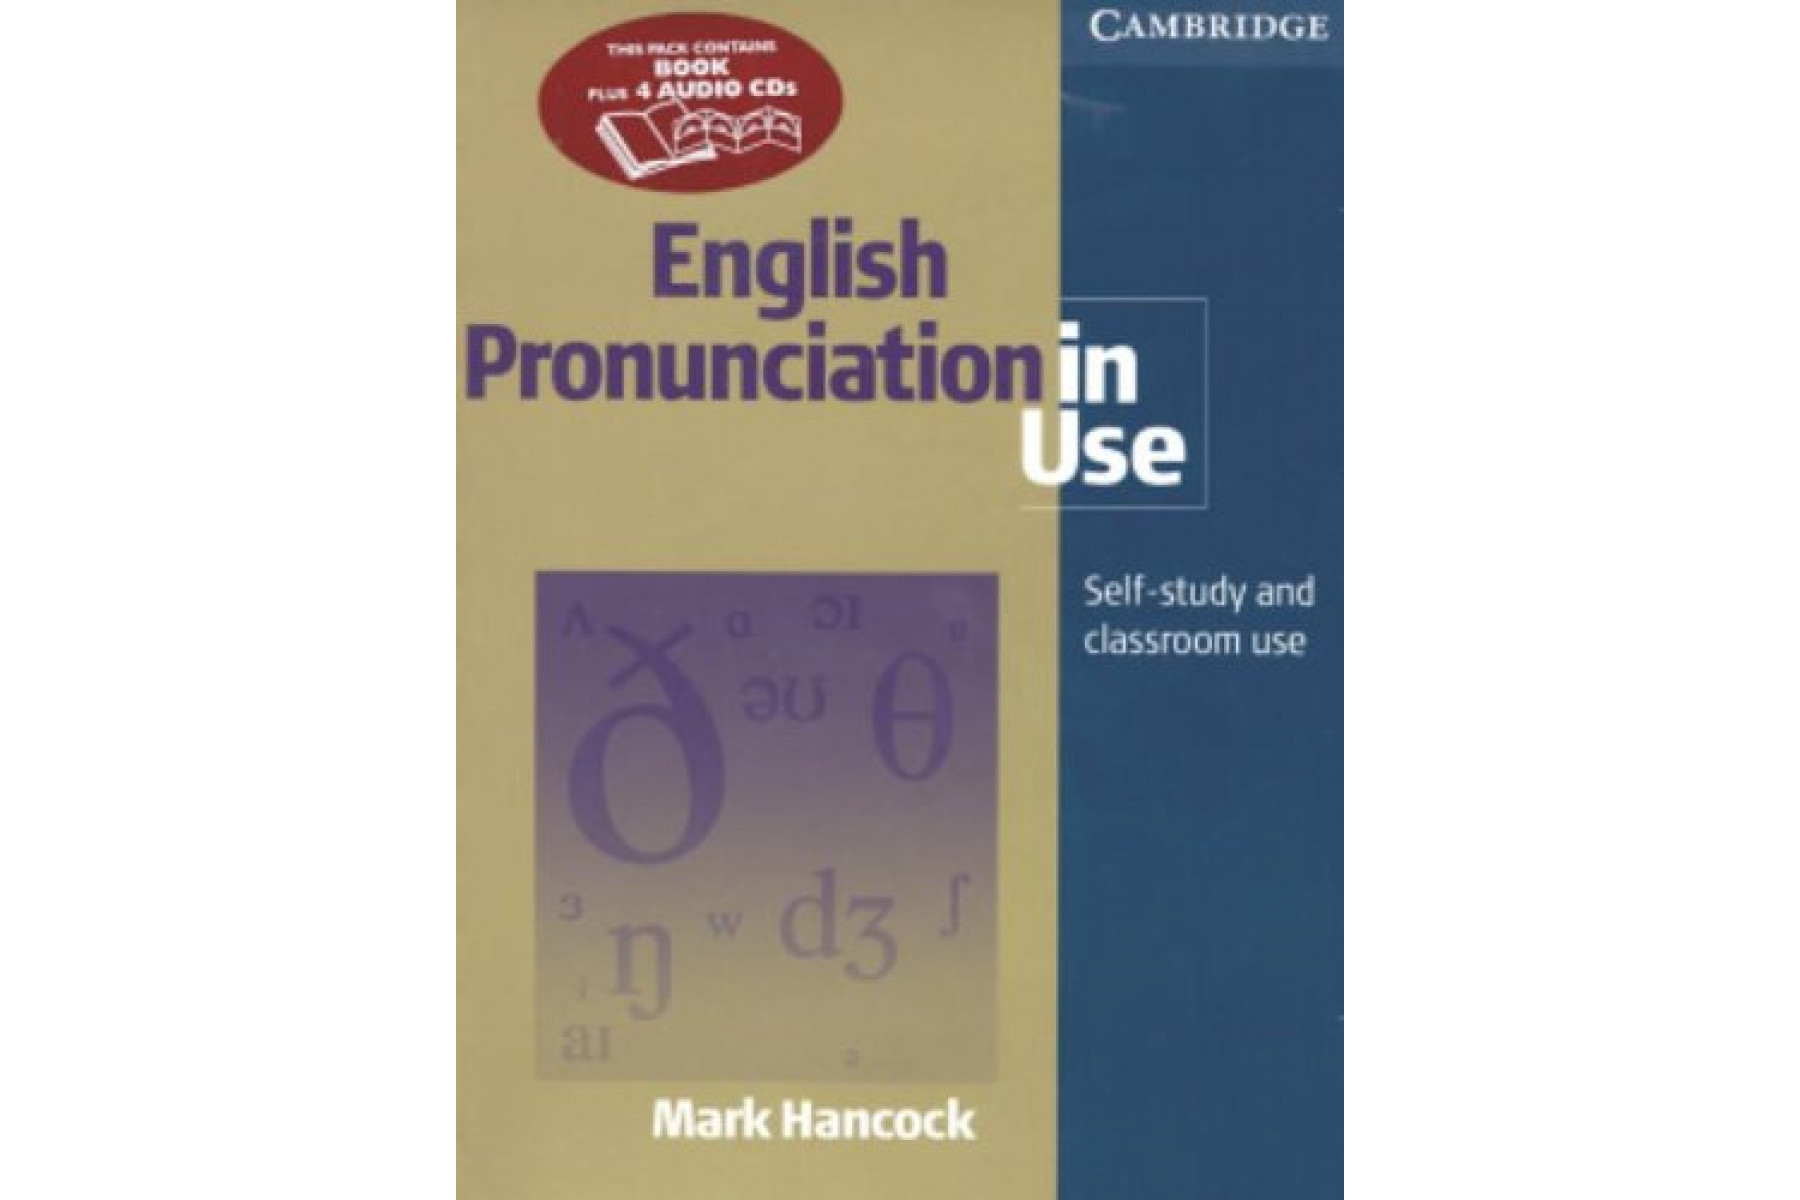 English Pronunciation in Use Intermediate Book + 4 Audio CD Pack